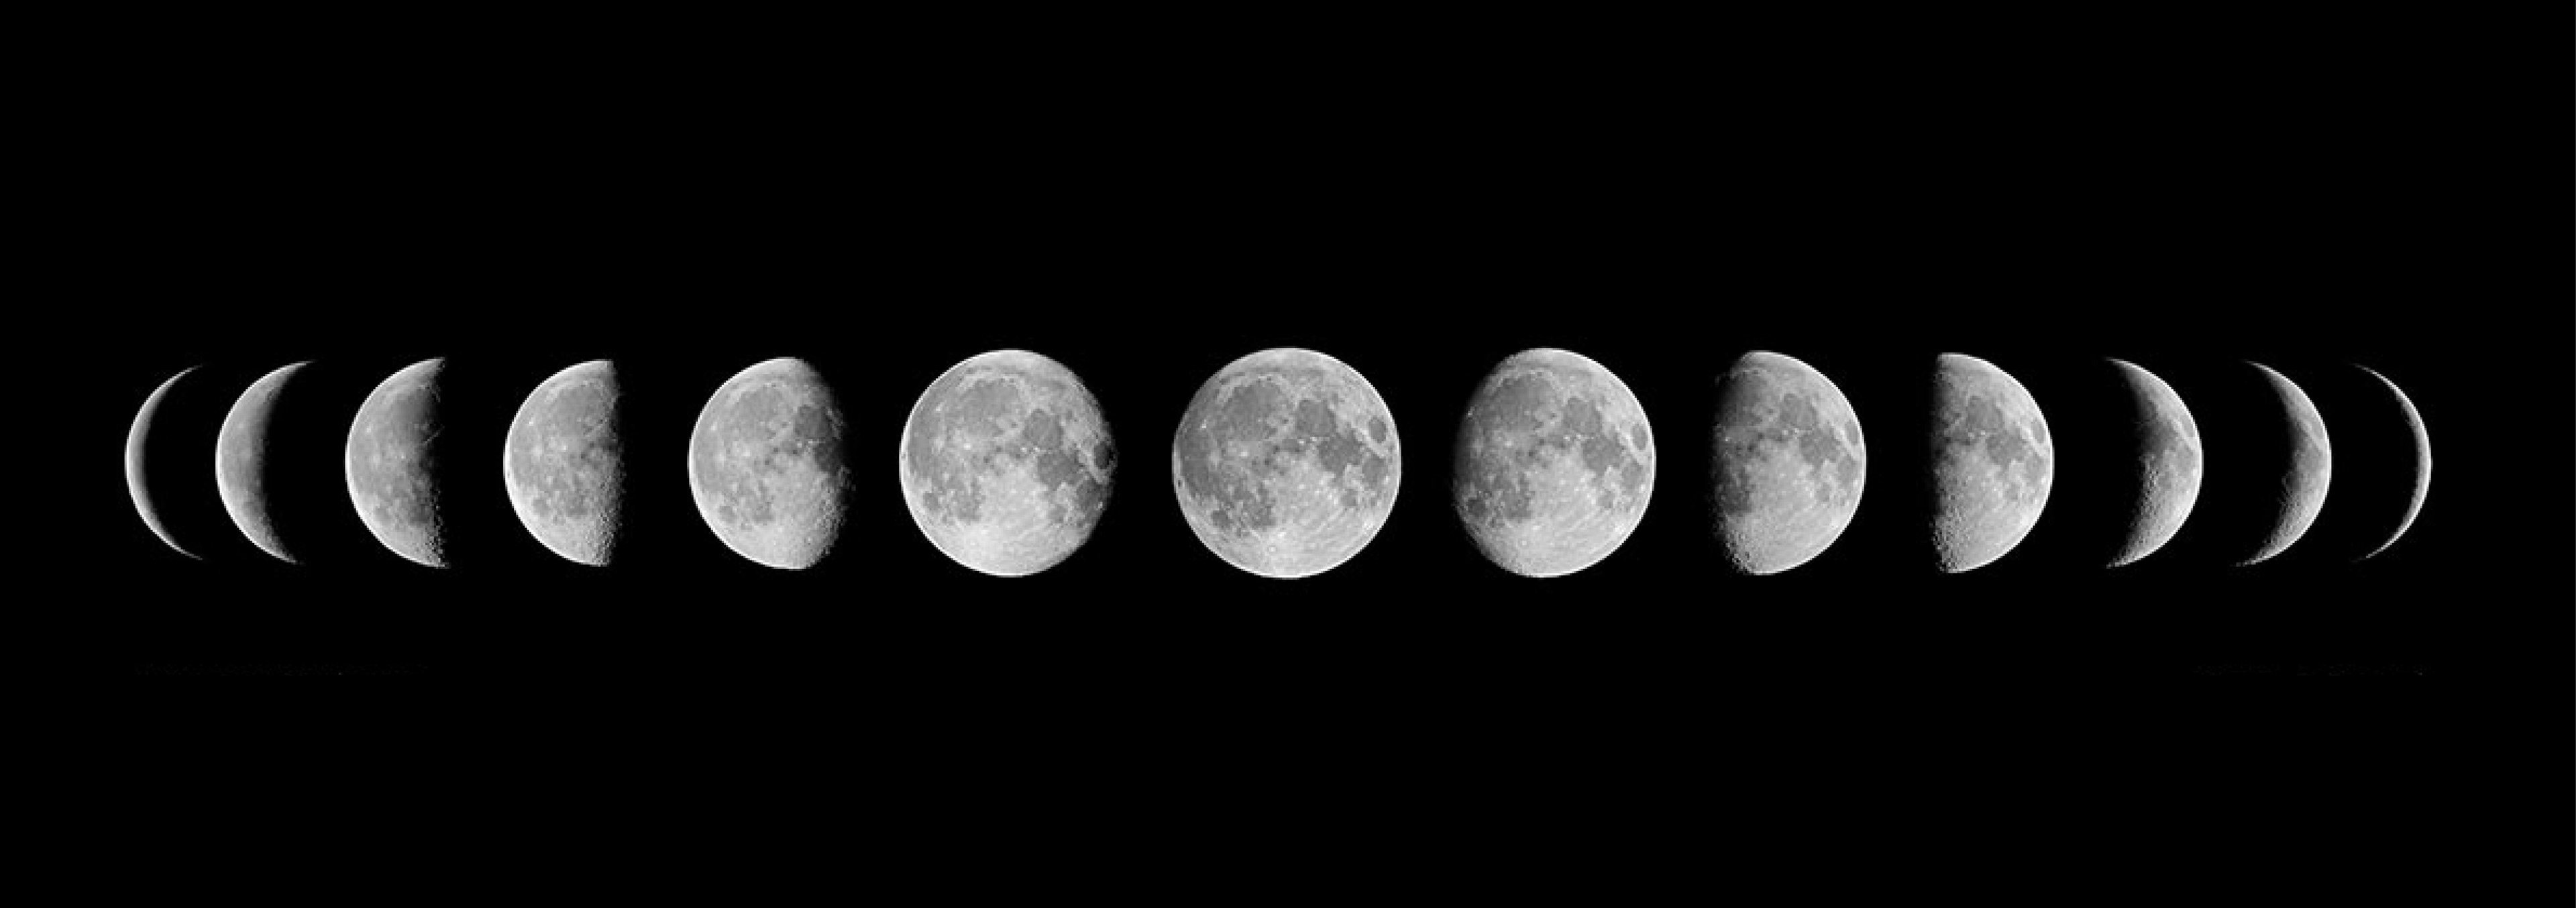 Включи серию луна. Фазы Луны. Полный цикл Луны. 12 Фаз Луны. Разная Луна.